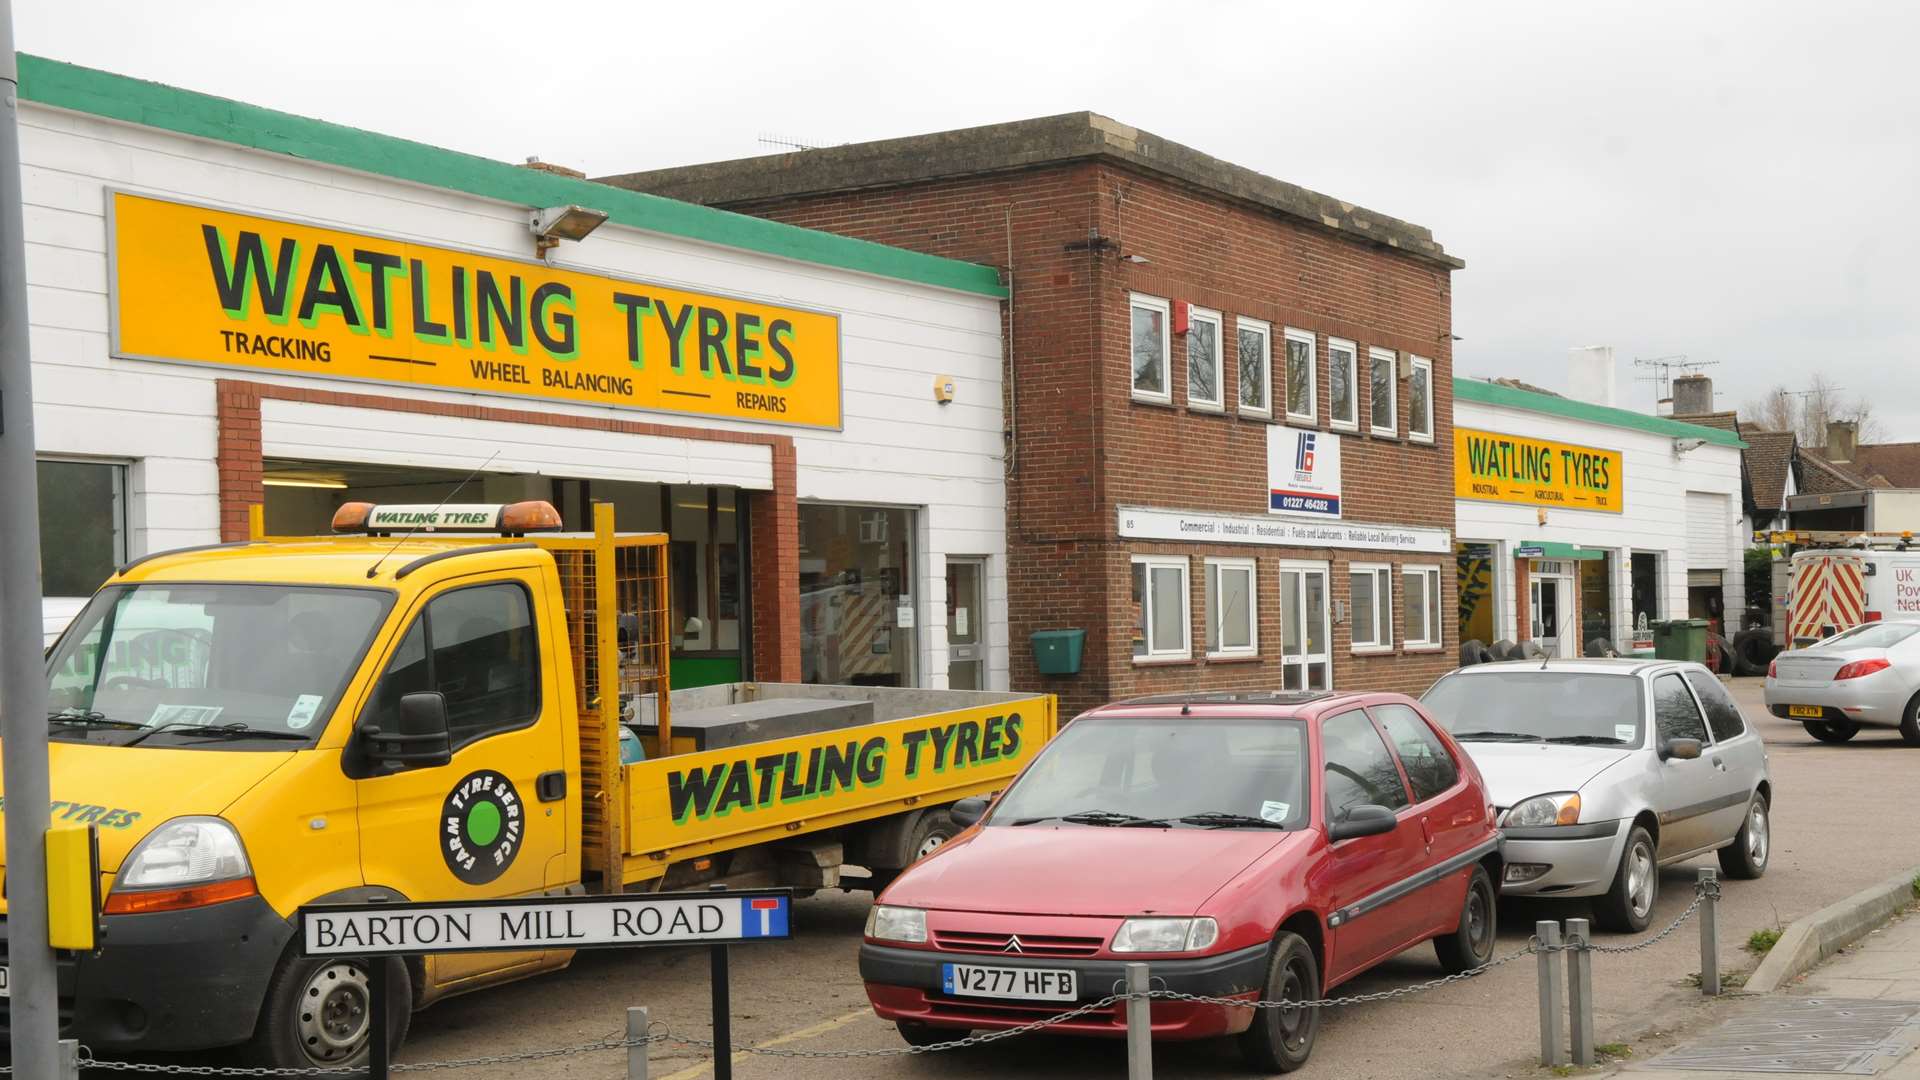 Watling Tyres is under new ownership